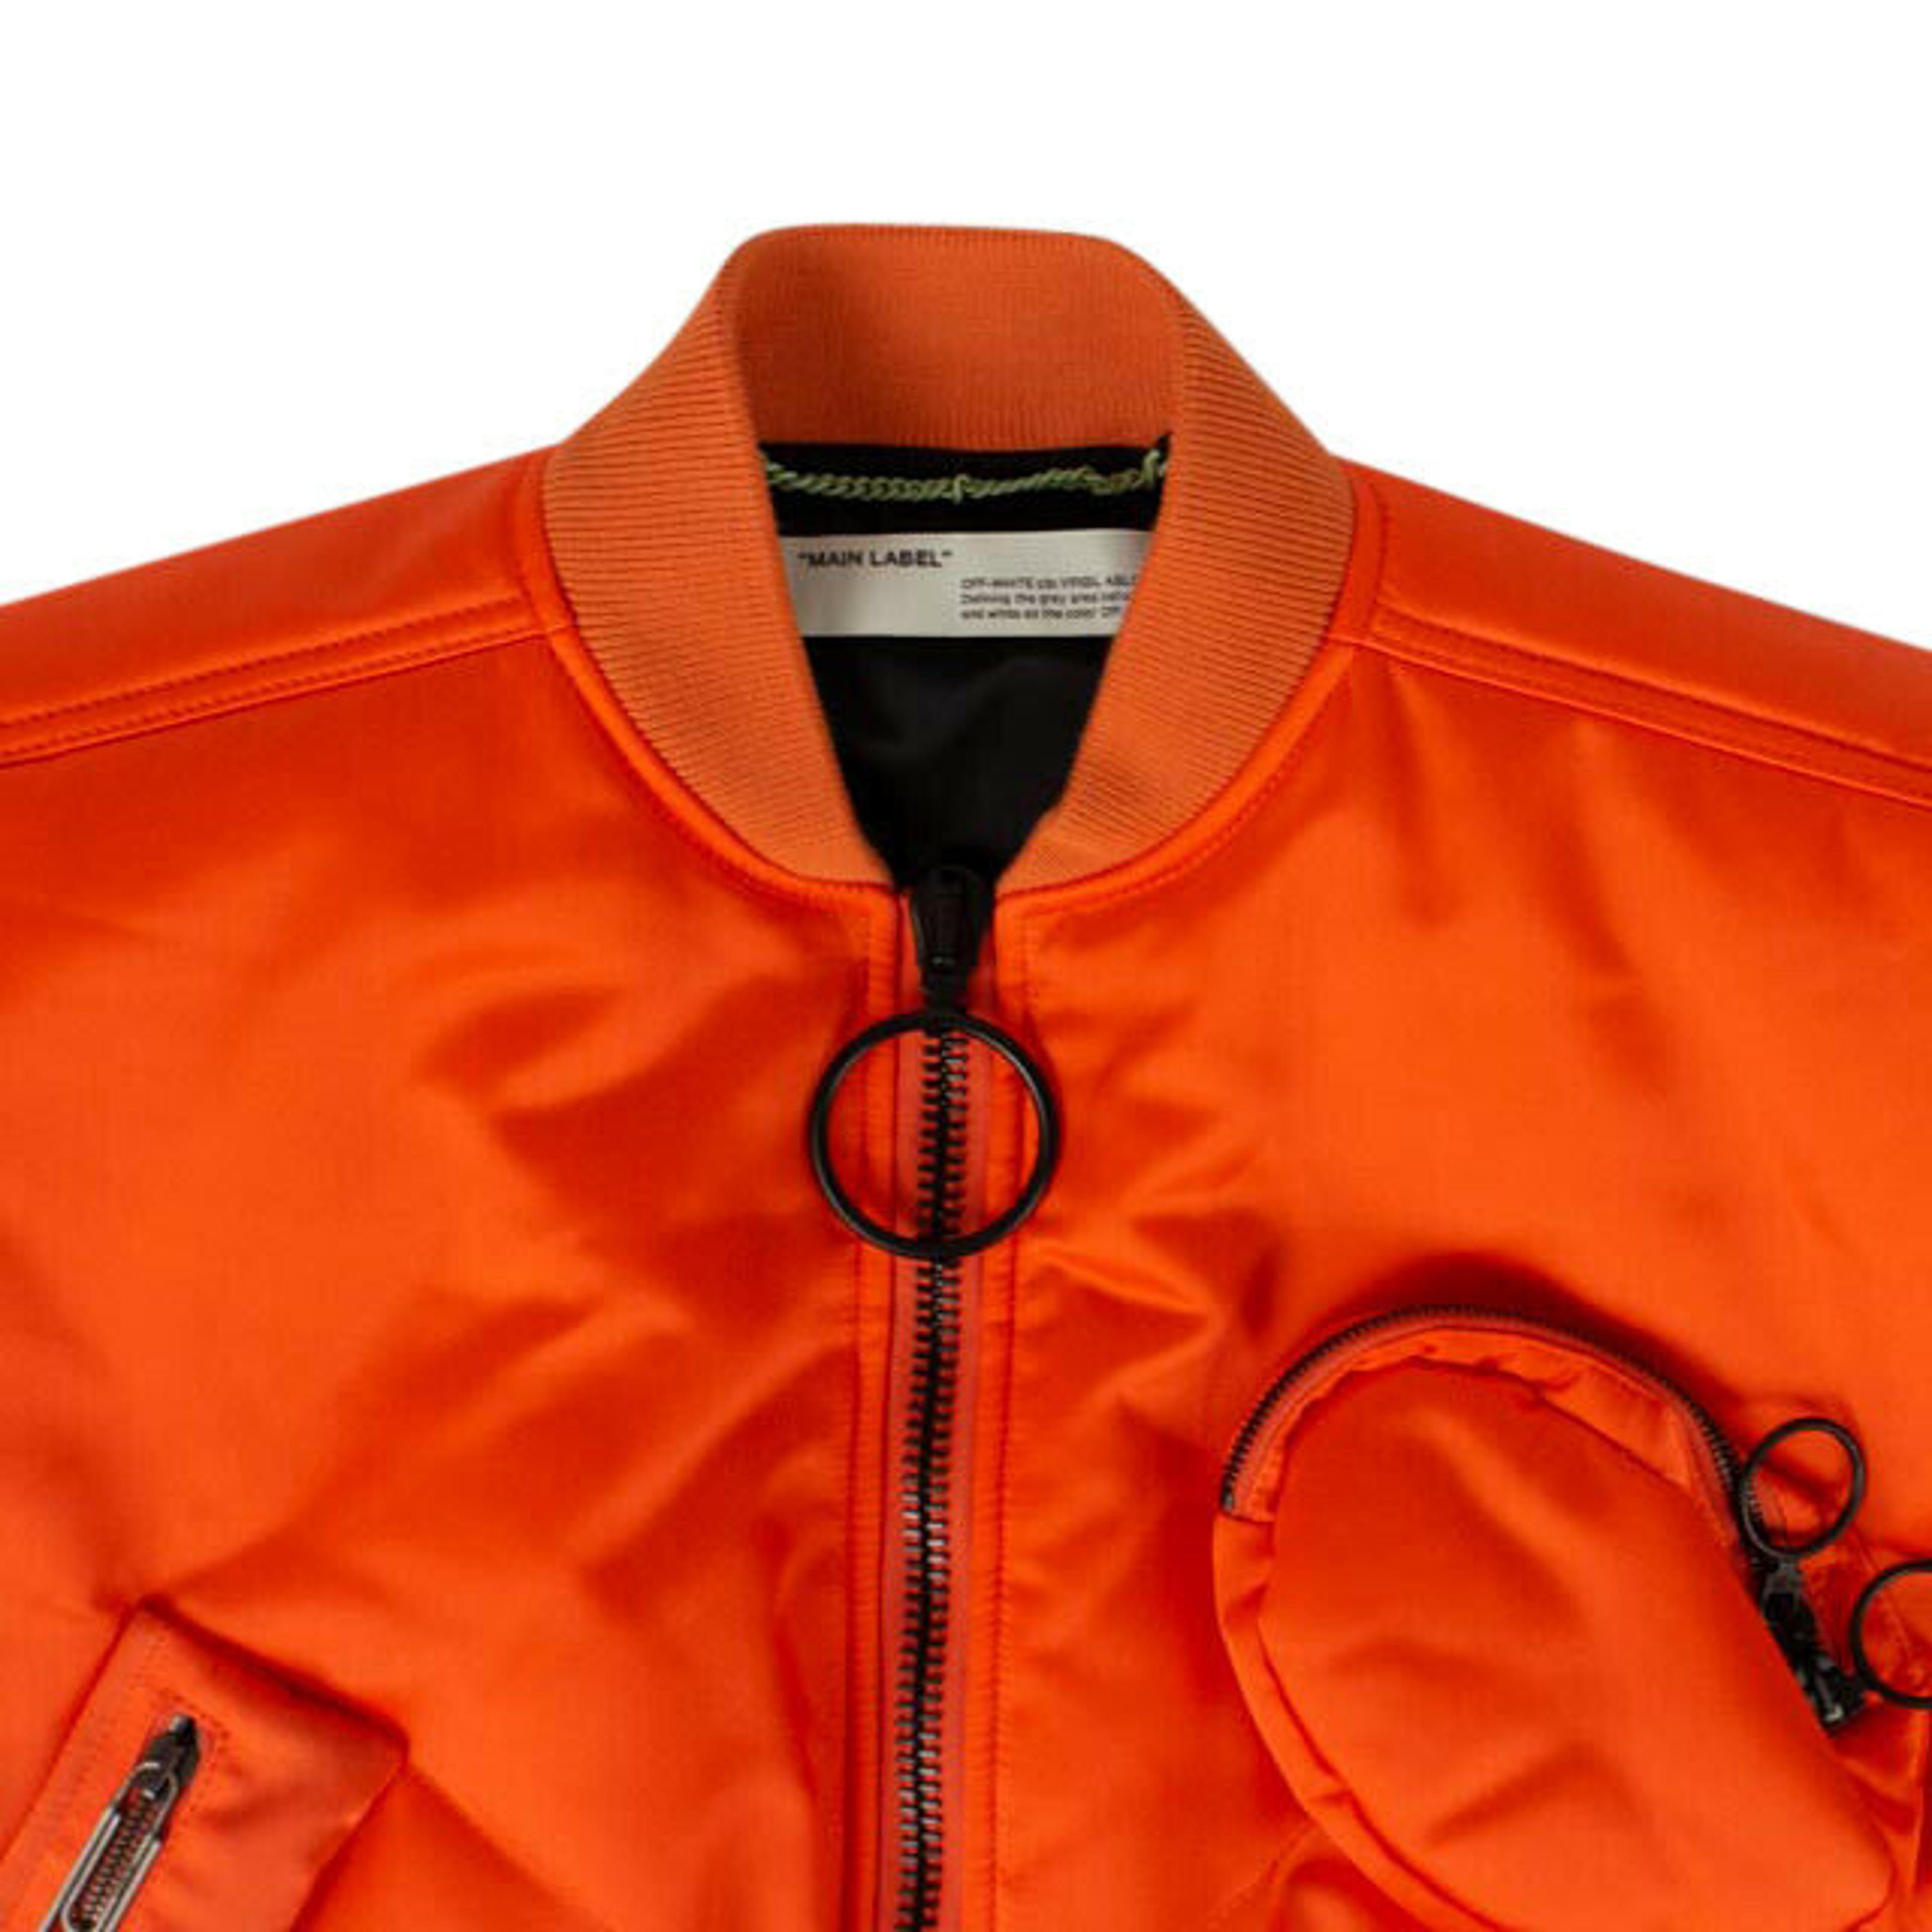 Alternate View 2 of Cropped Arrows Vest Jacket - Orange